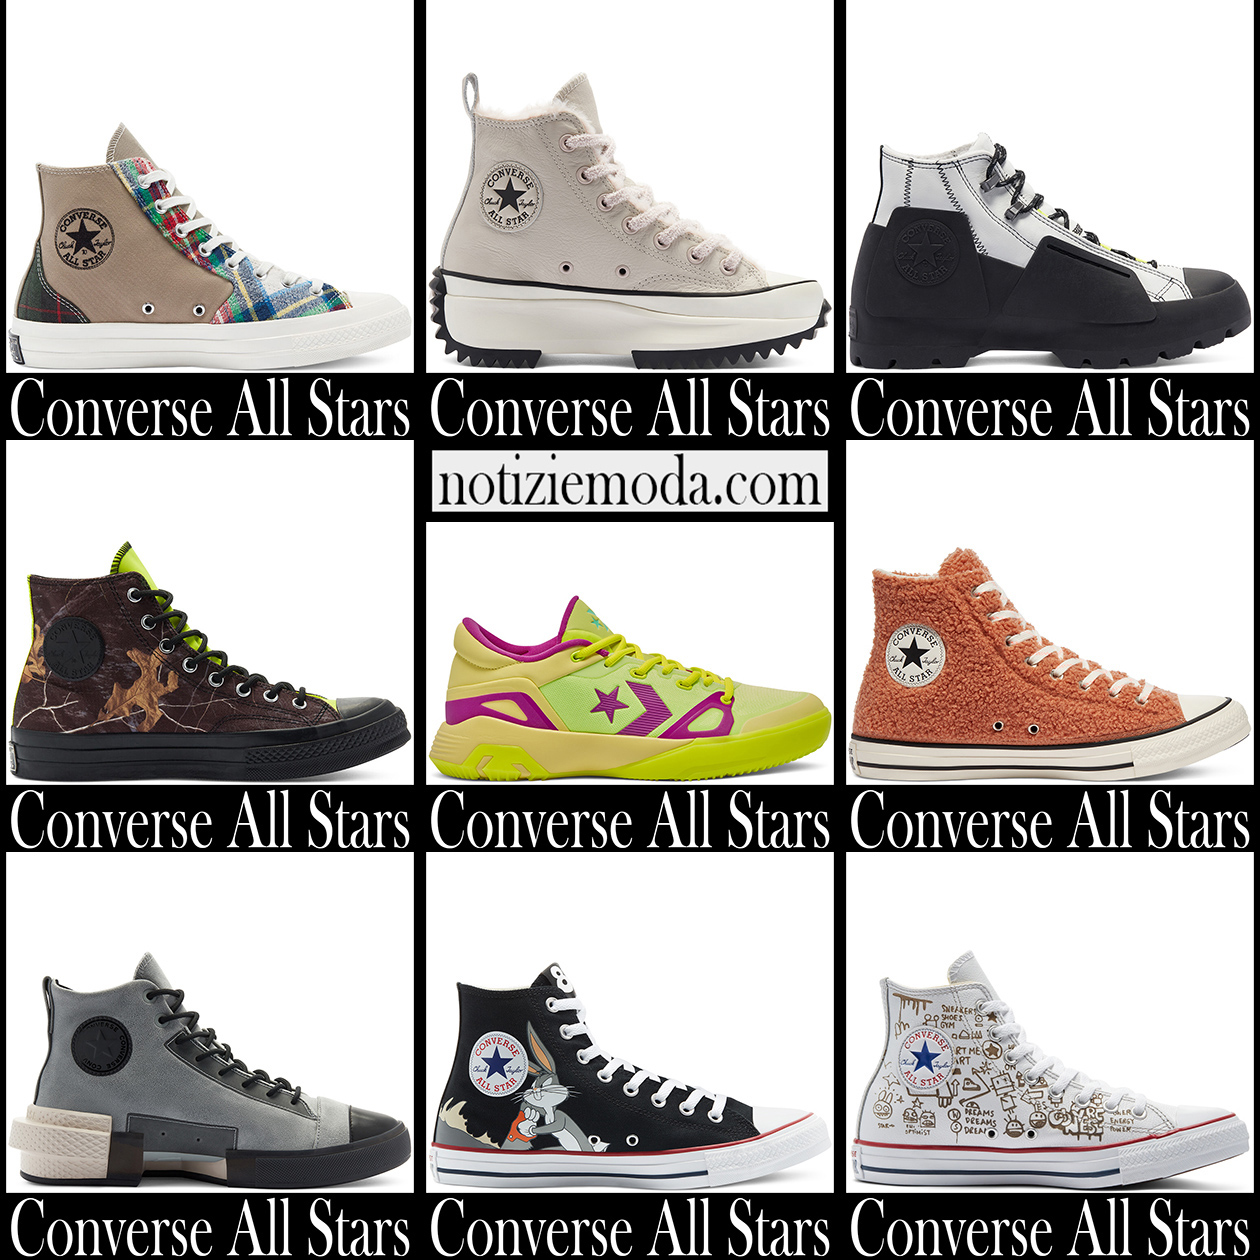 Nuovi arrivi sneakers Converse 2021 All Stars uomo عطور تعبئة